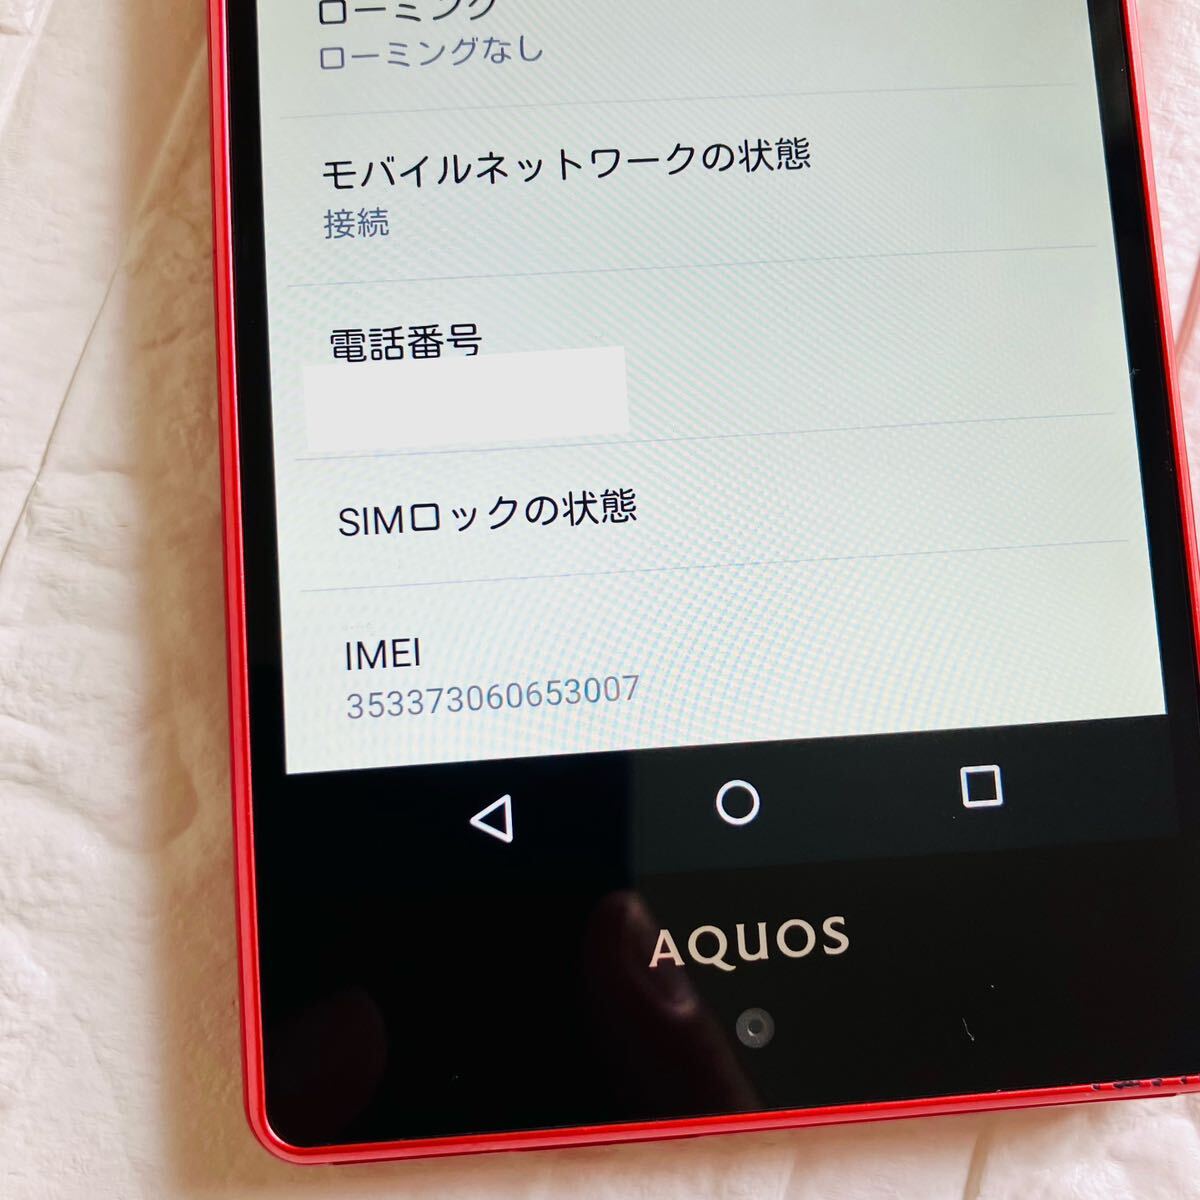 【 SIMロック解除済 美品】 SHARP AQUOS SERIE mini SHV33 Android 5.1.1 PlayStore ver.39 導入済 コレクション アプリ検証用に 1スタ _画像9